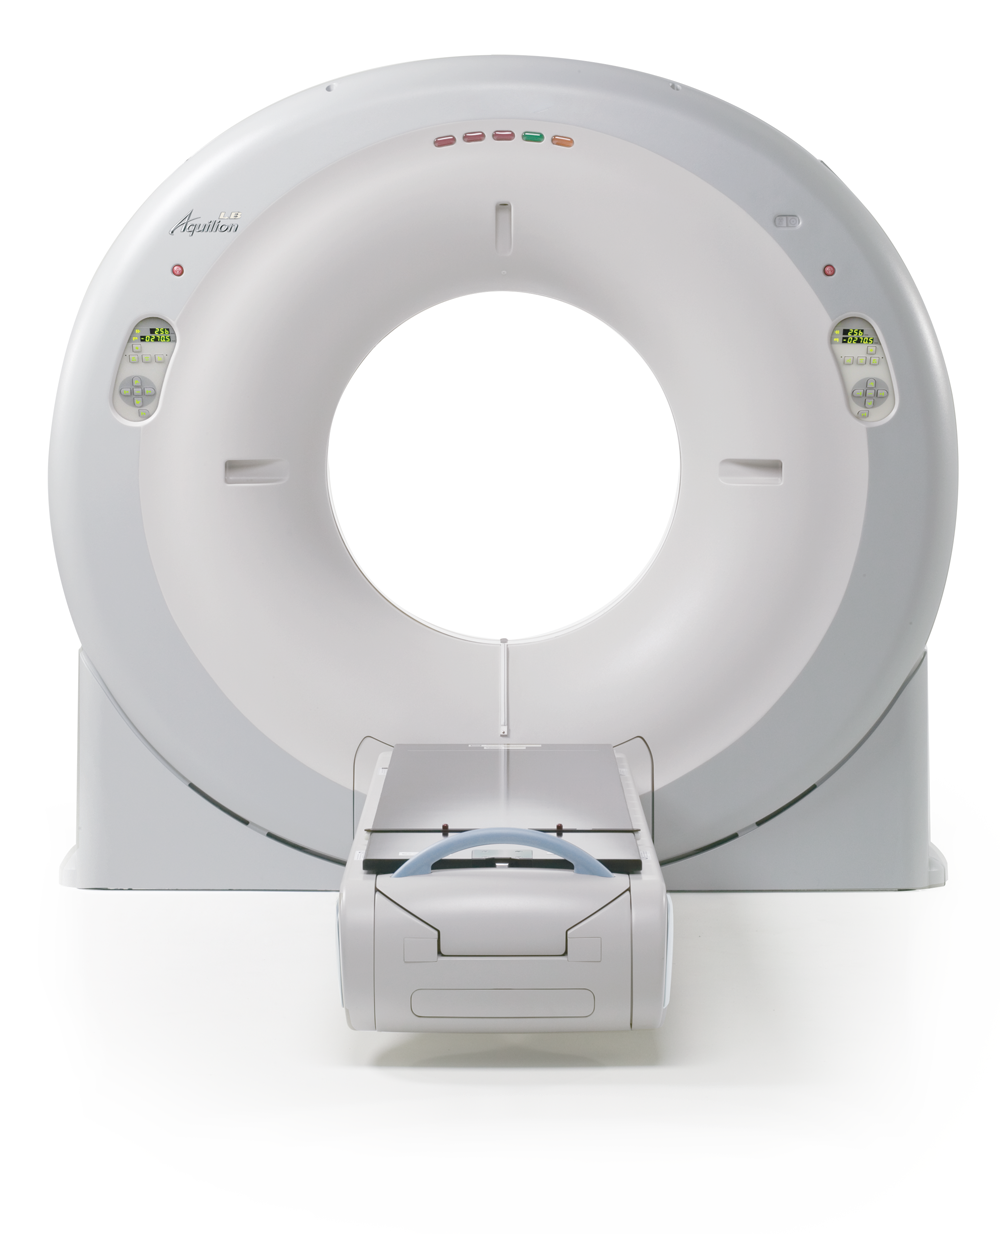 Aquilion LB CT scanner